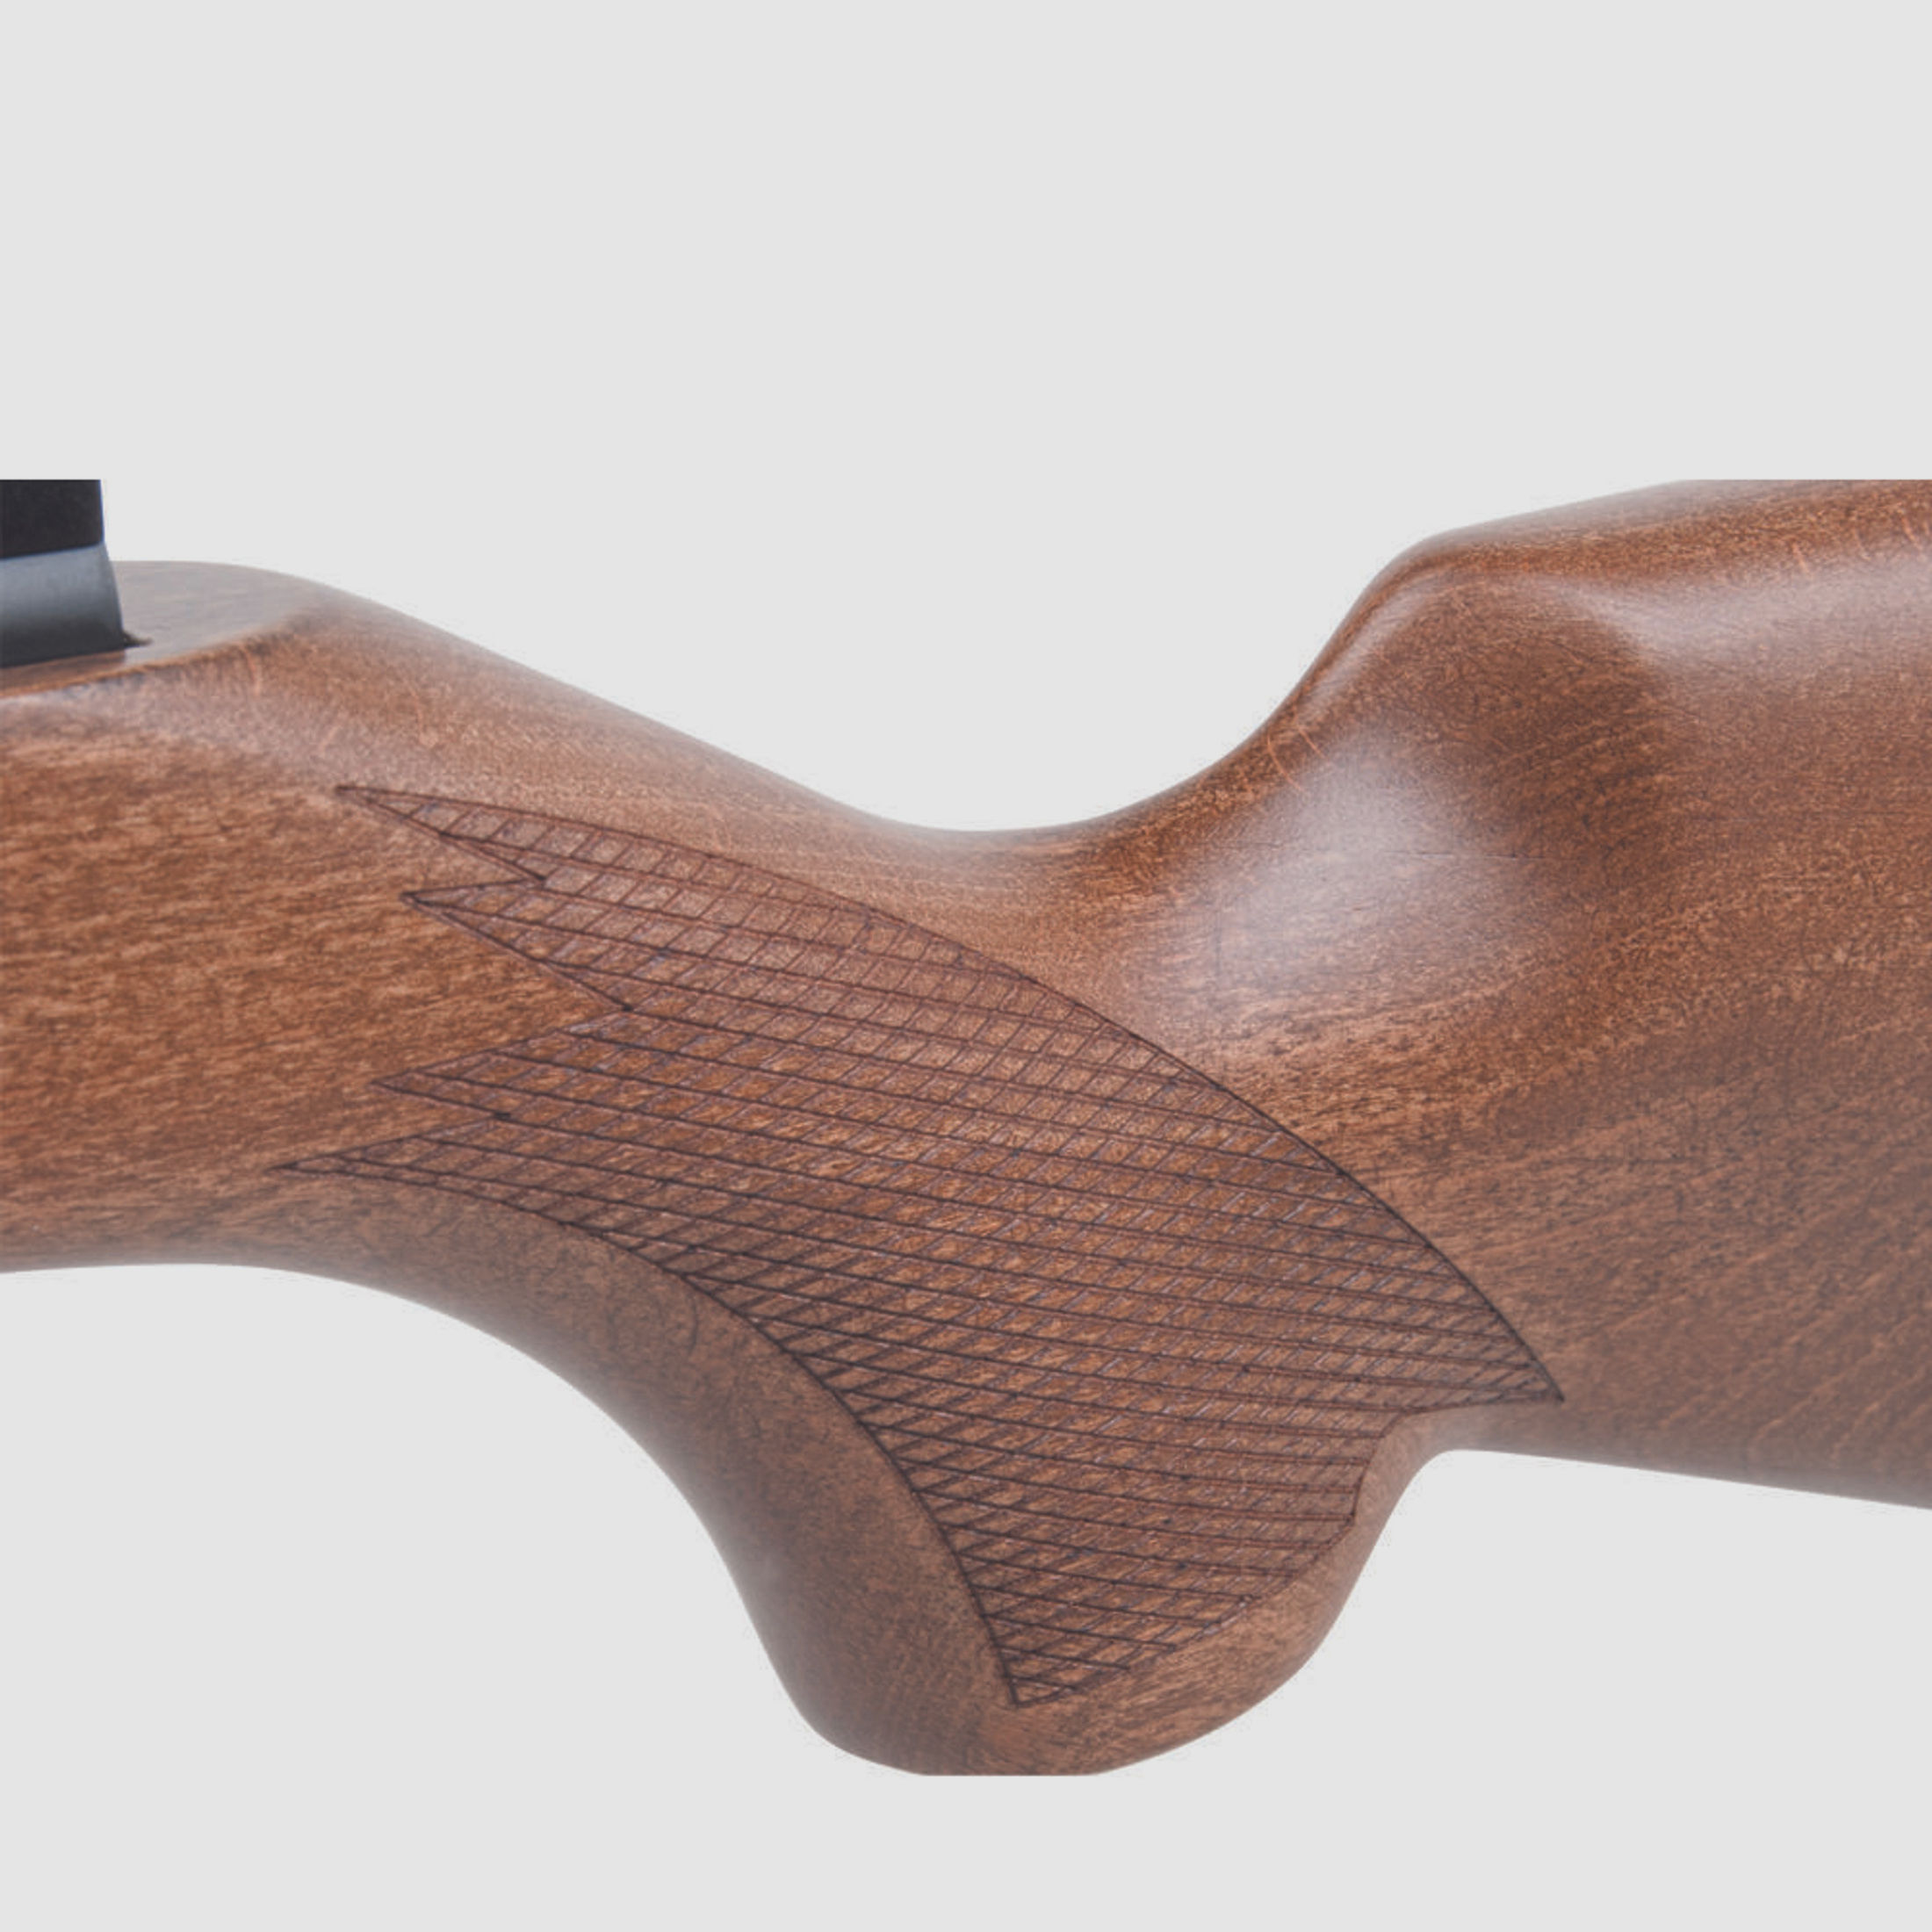 Diana Stormrider Pressluftgewehr mit Holzschaft Kaliber 4,5mm Diabolo